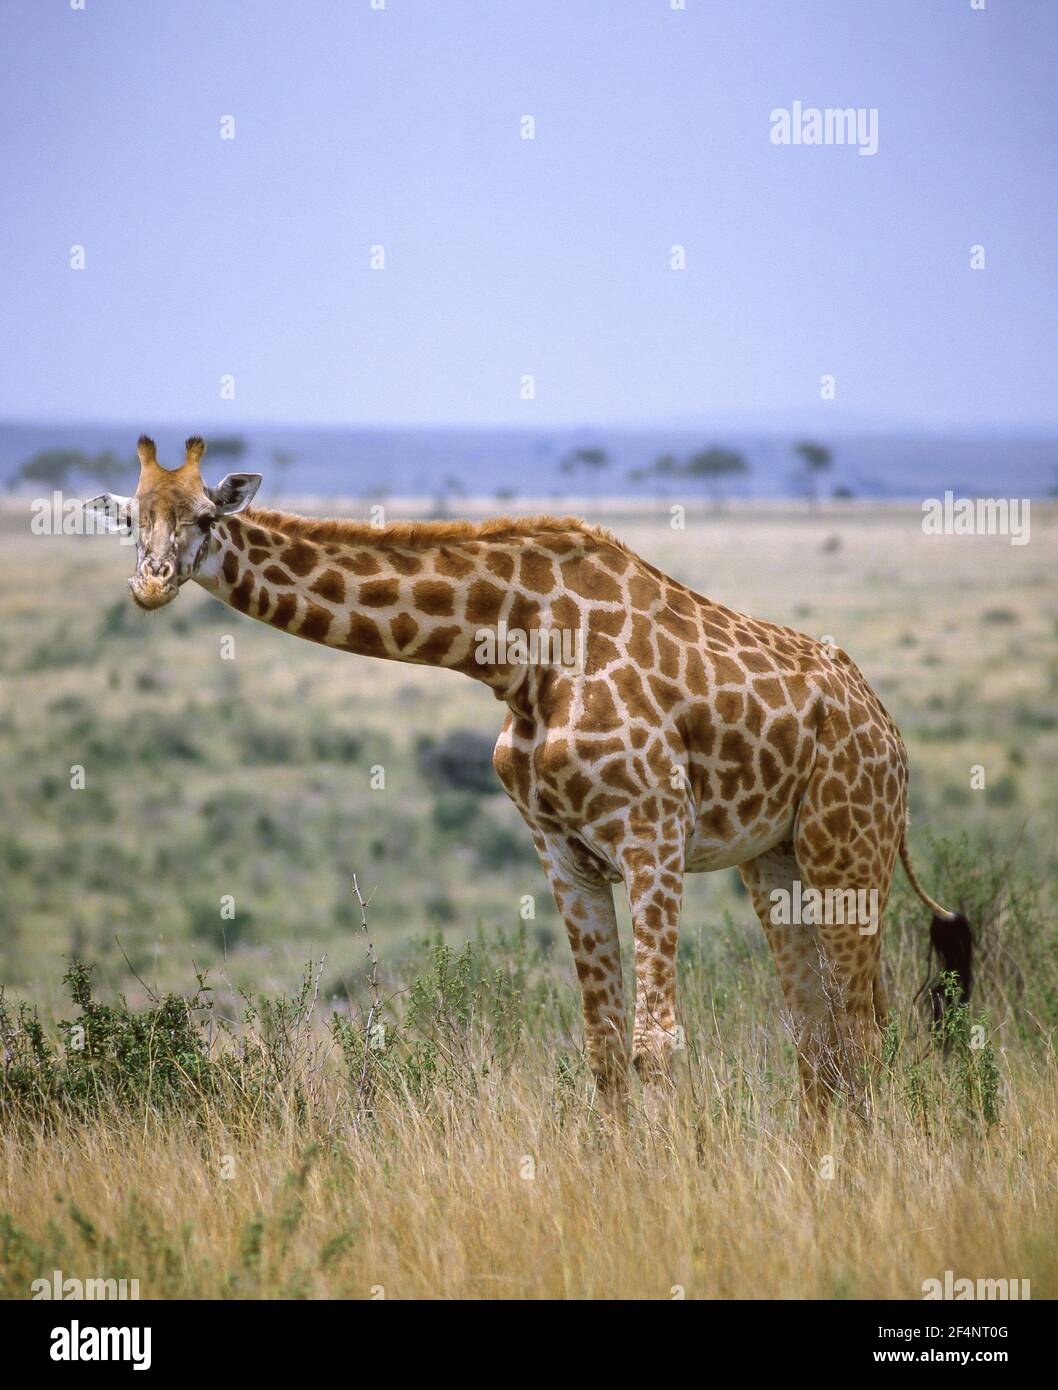 Girafe debout dans les prairies, Maasai Mara National Reserve, Kenya, comté de Narok Banque D'Images